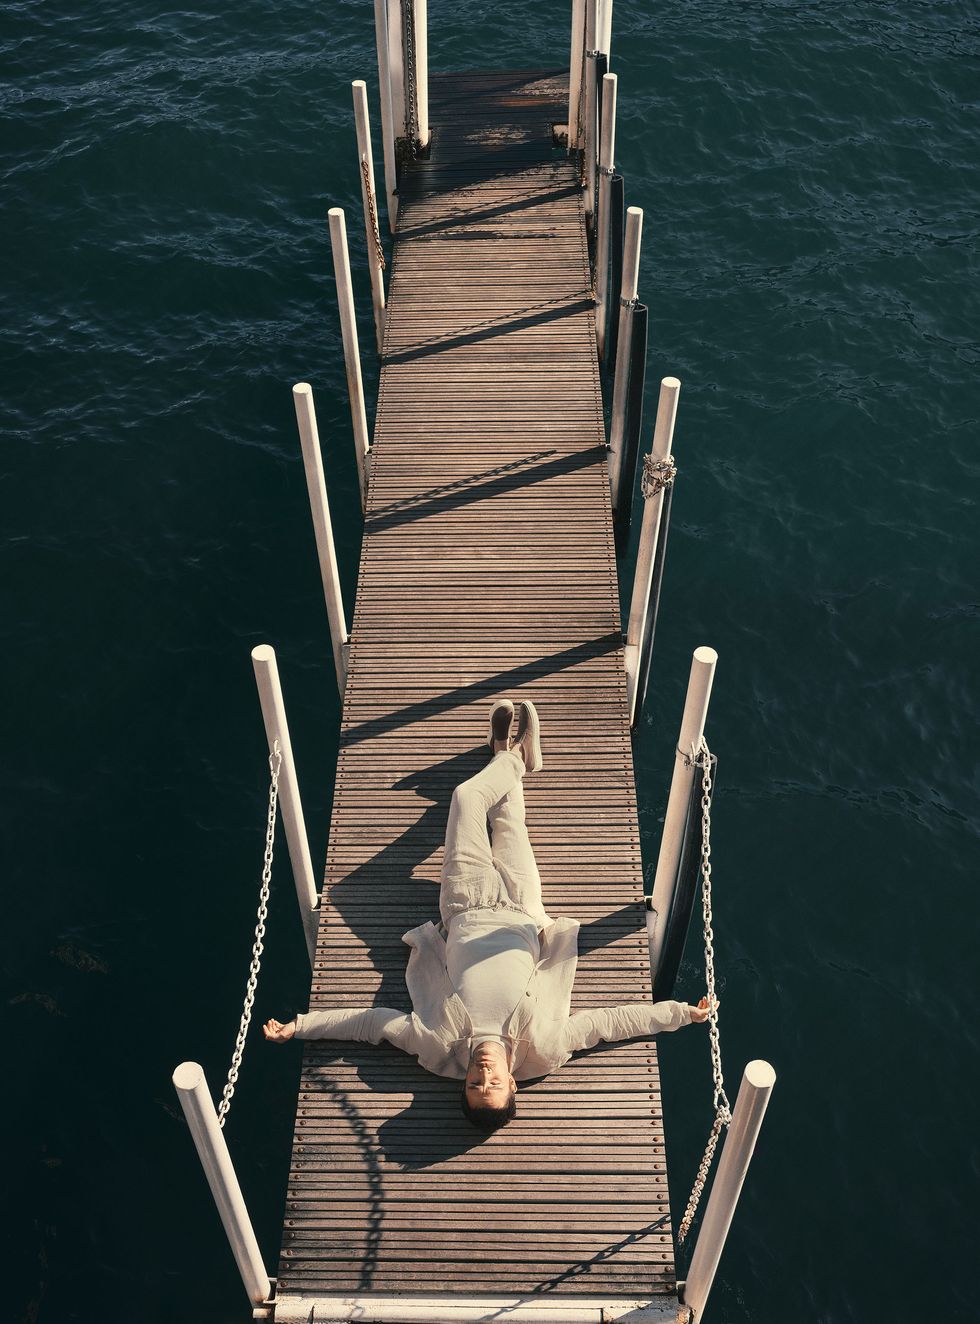 ed lying down on a dock